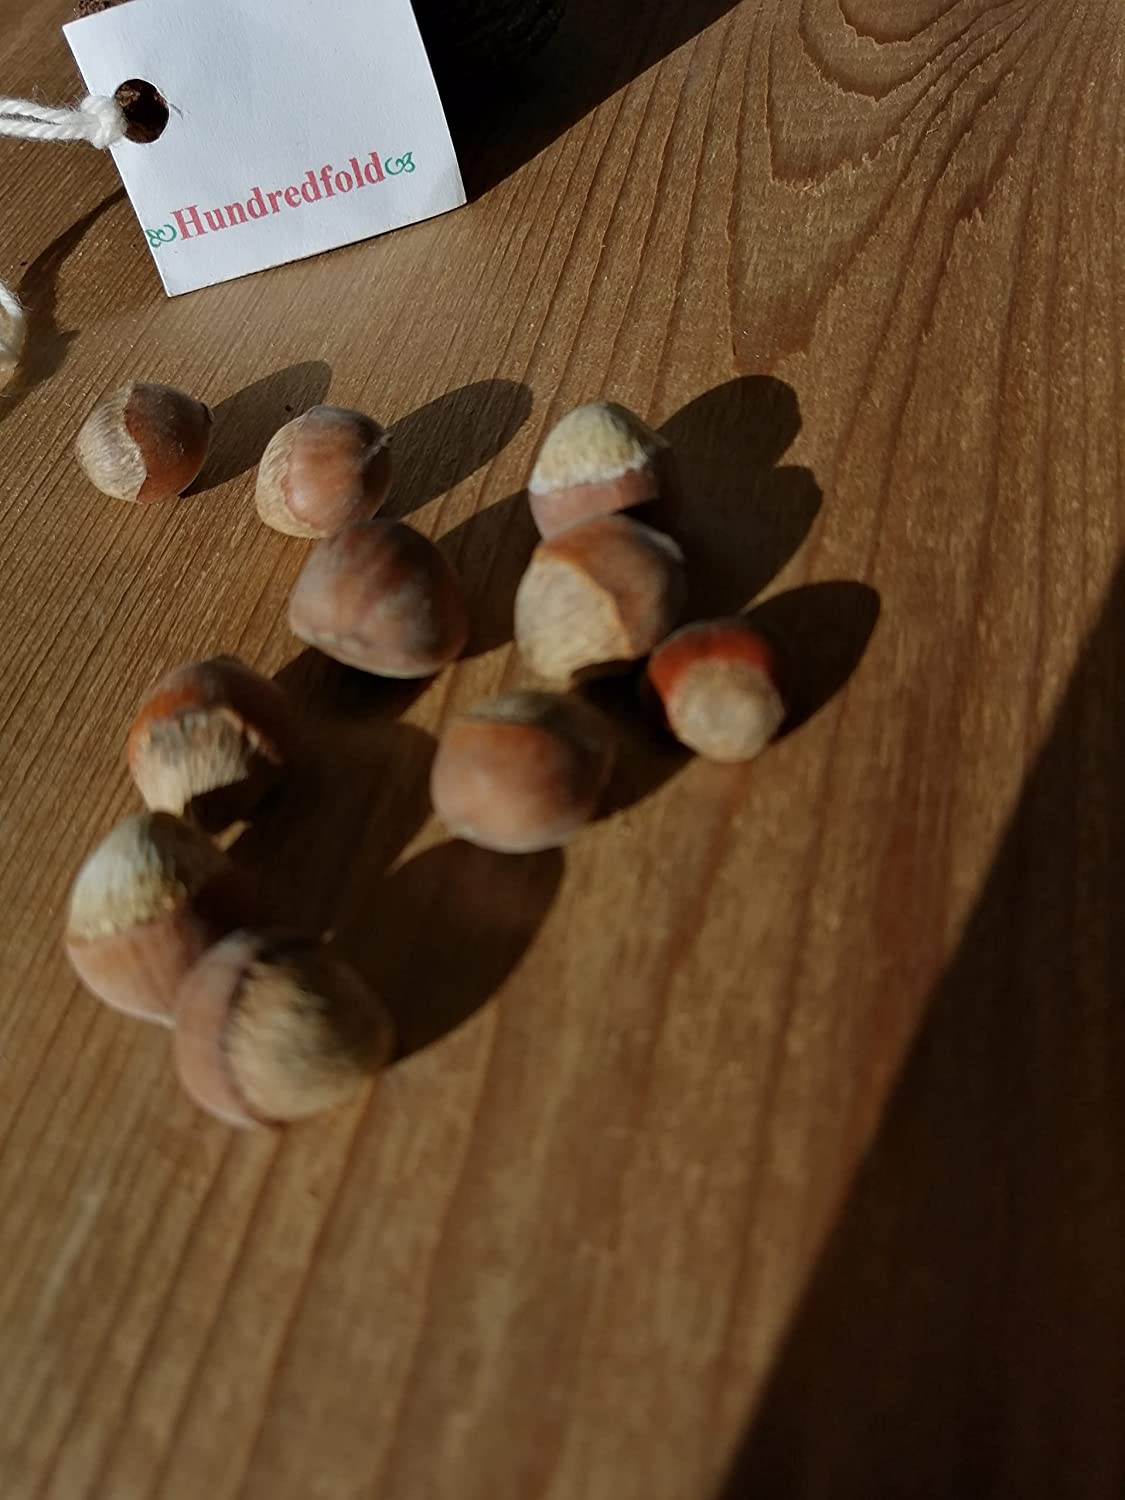 Hundredfold American Hazelnut 5 Tree Seeds - Corylus Americana Non-GMO Canada and USA Native, Filbert Nuts